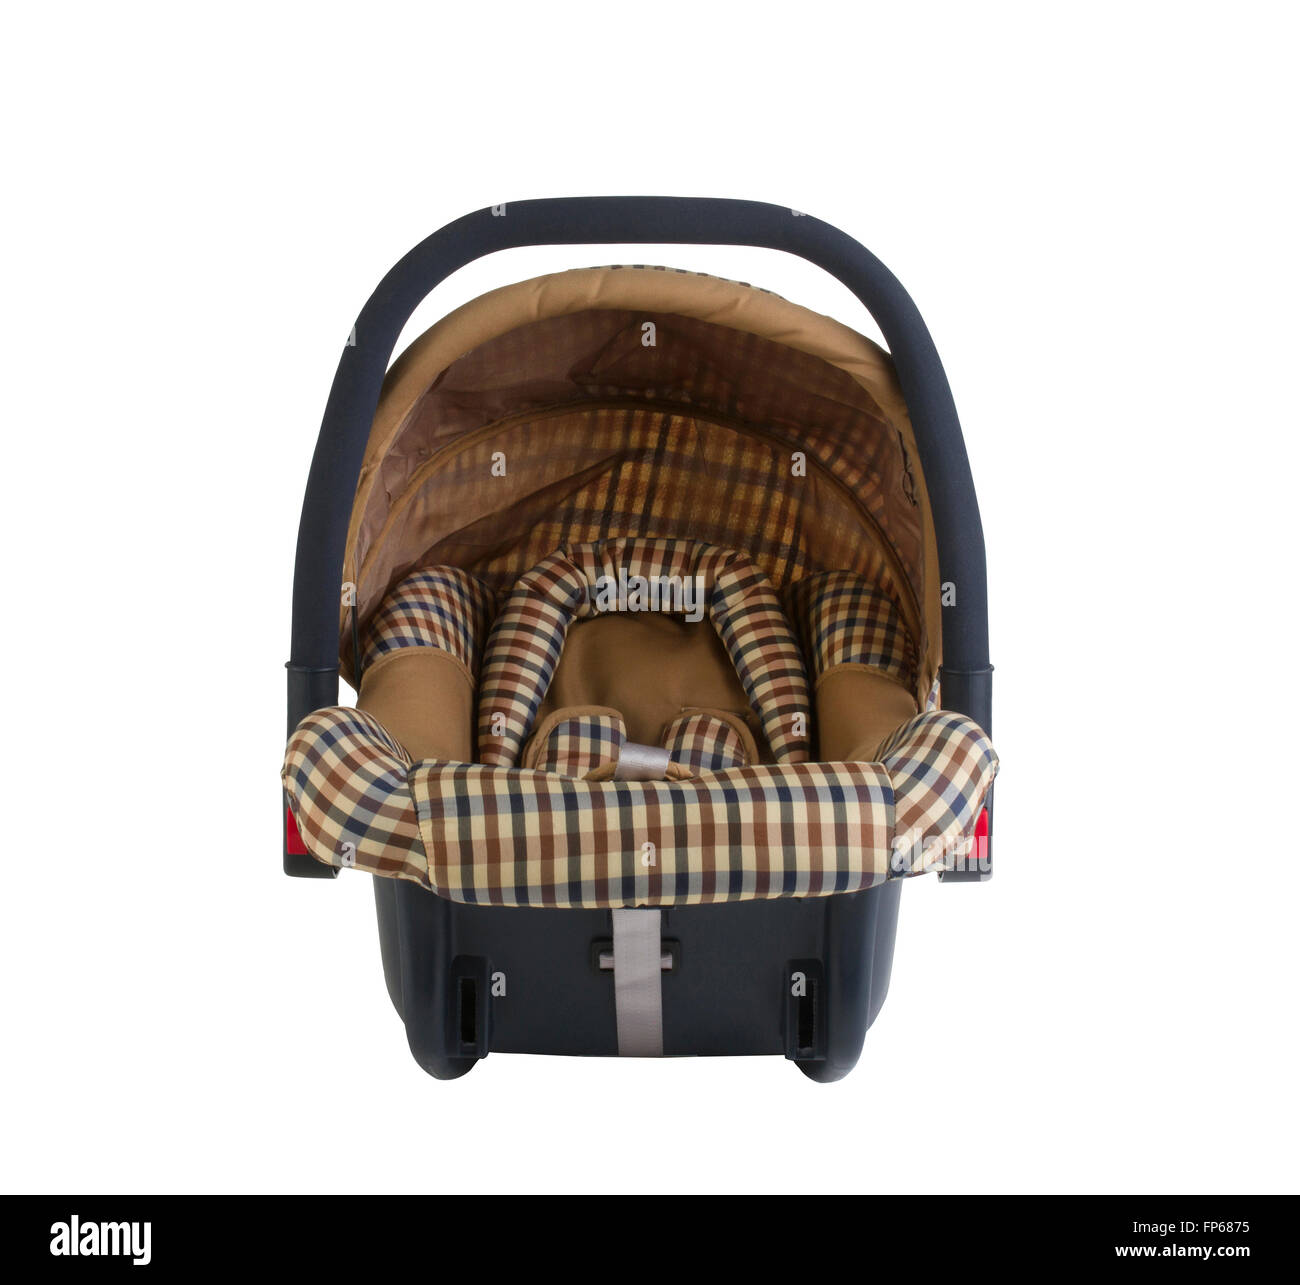 Baby car seat isolated on white background Stock Photo